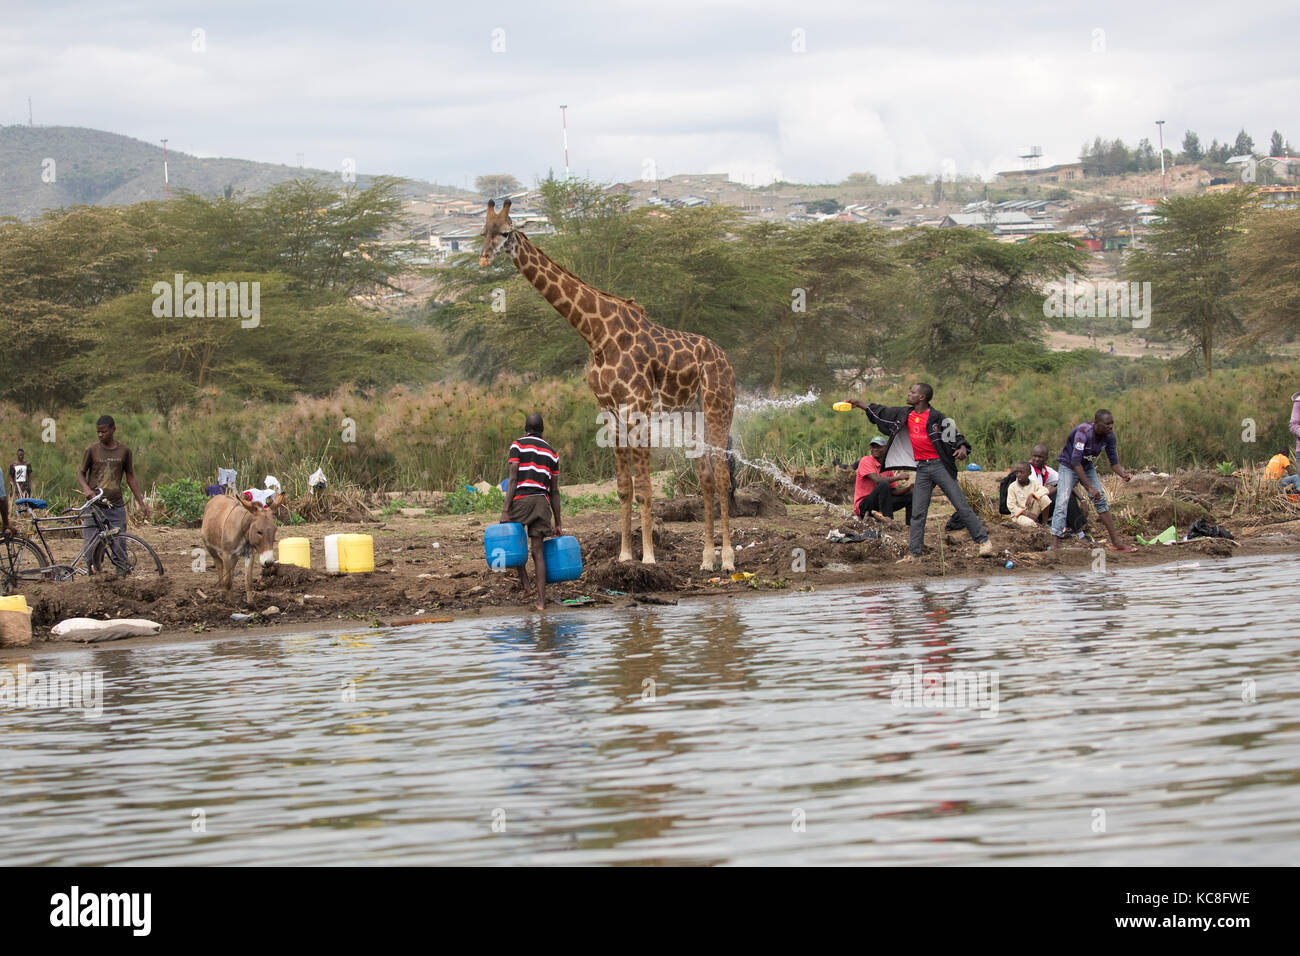 African man throwing water at Eric the tame giraffe Giraffa camelopardalis amongst fishermen on shore Lake Naivasha Kenya Stock Photo